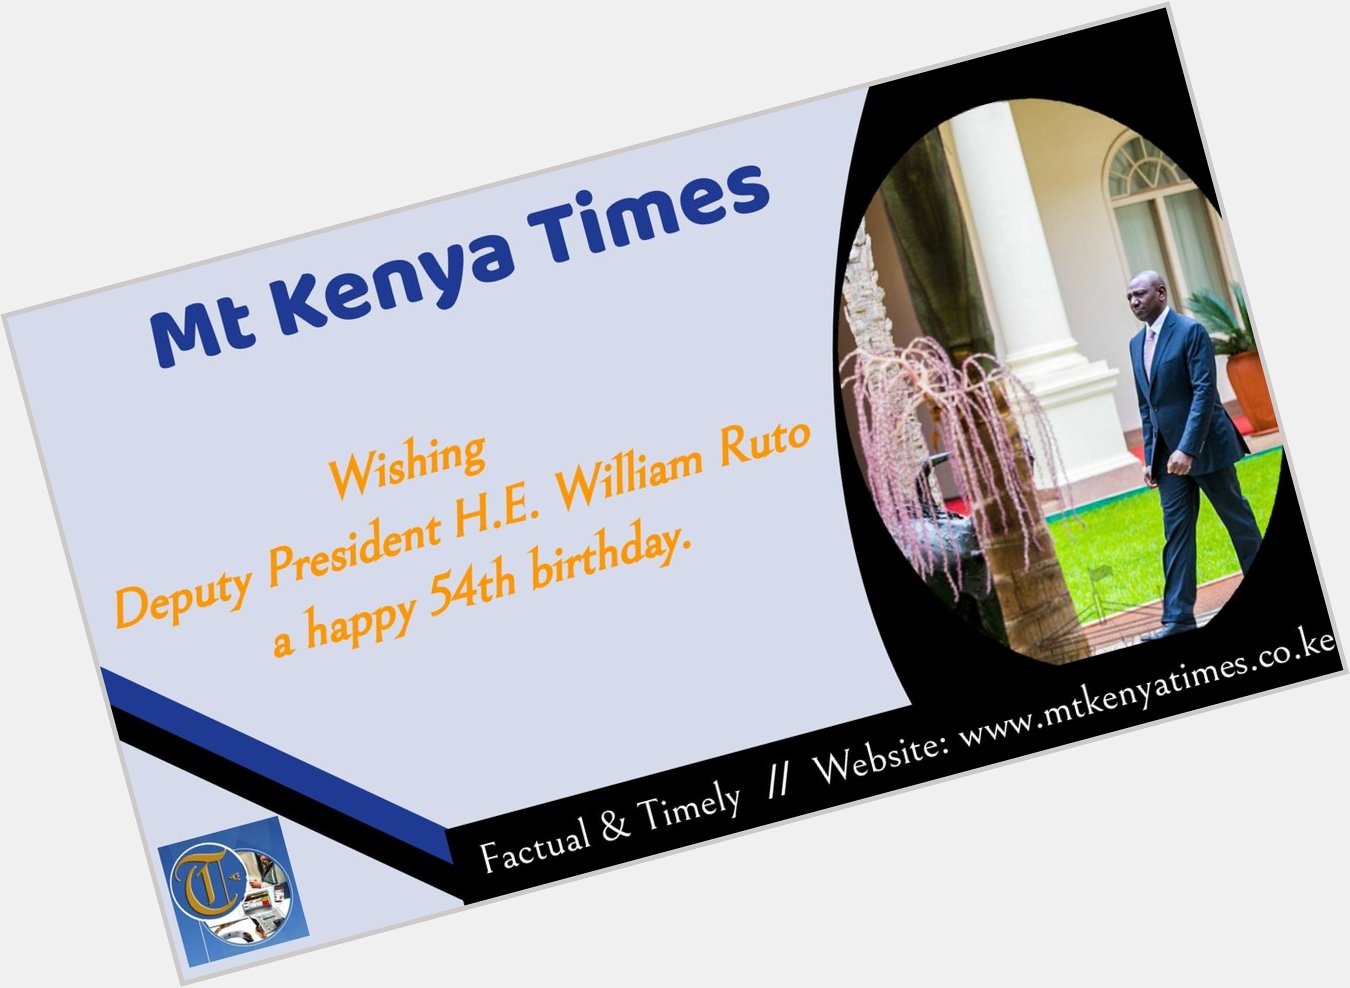 Wishing Deputy President H.E William Ruto a happy birthday. 